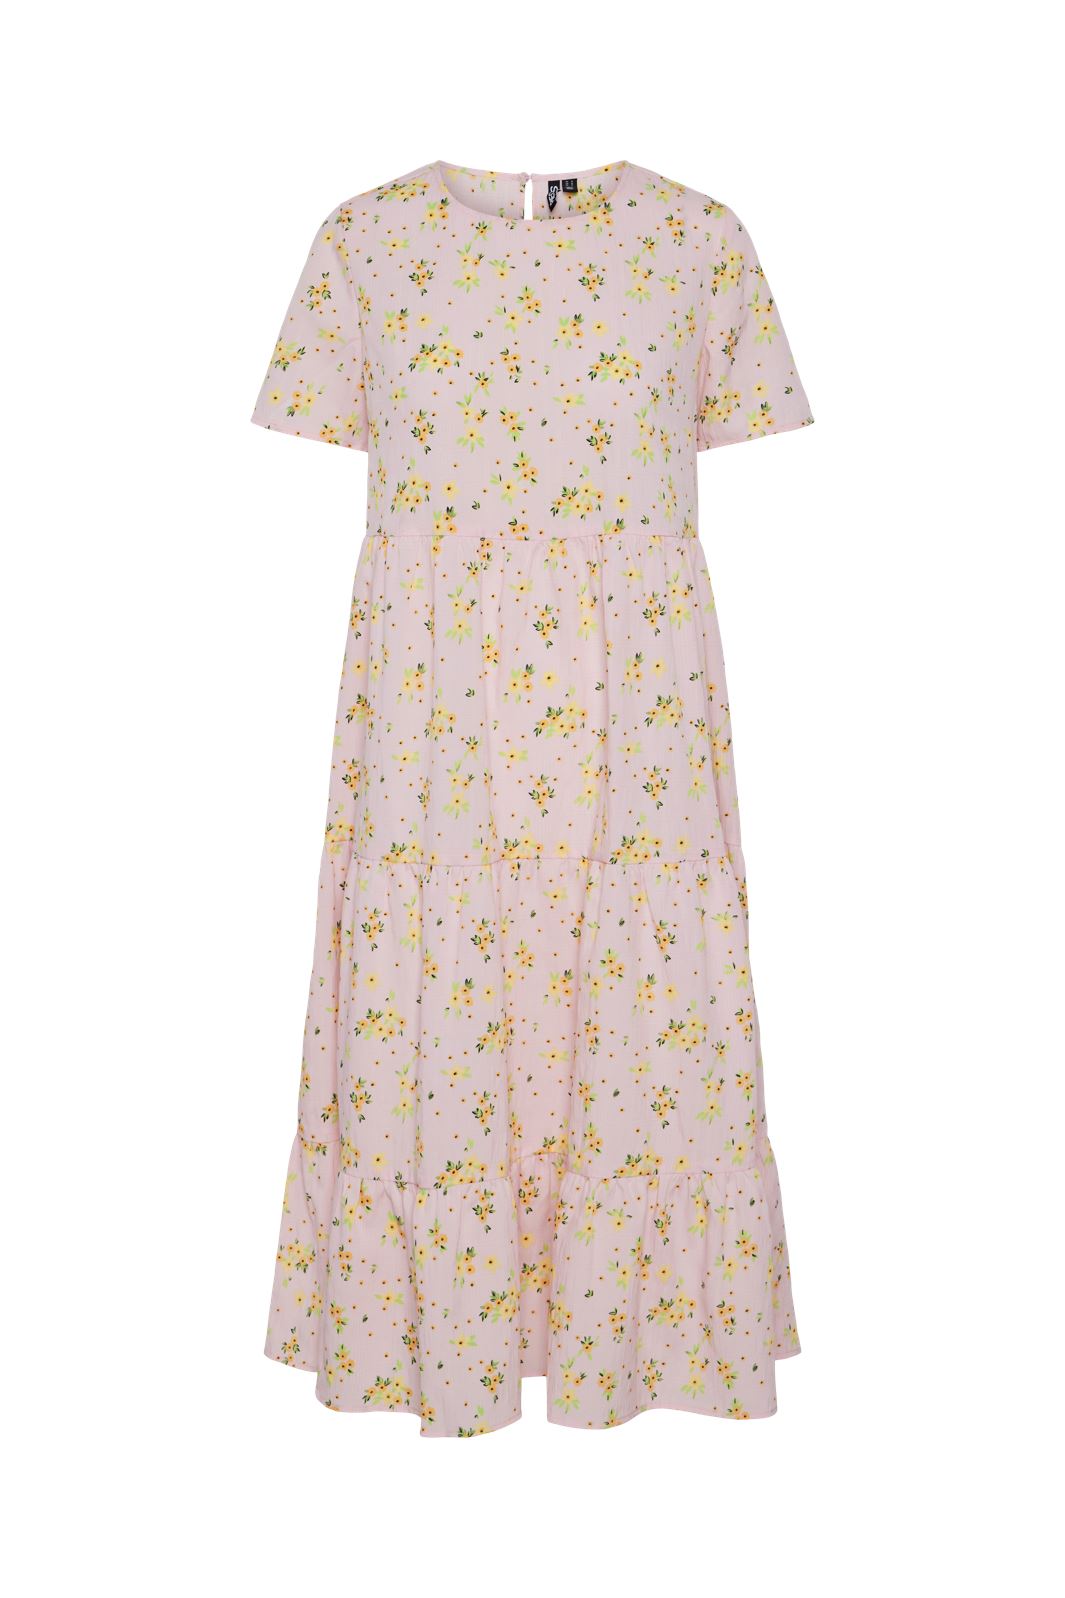 Pieces - Pcstella Ss O-Neck Midi Dress - 4625015 Fairy Tale Pale Banana Flower